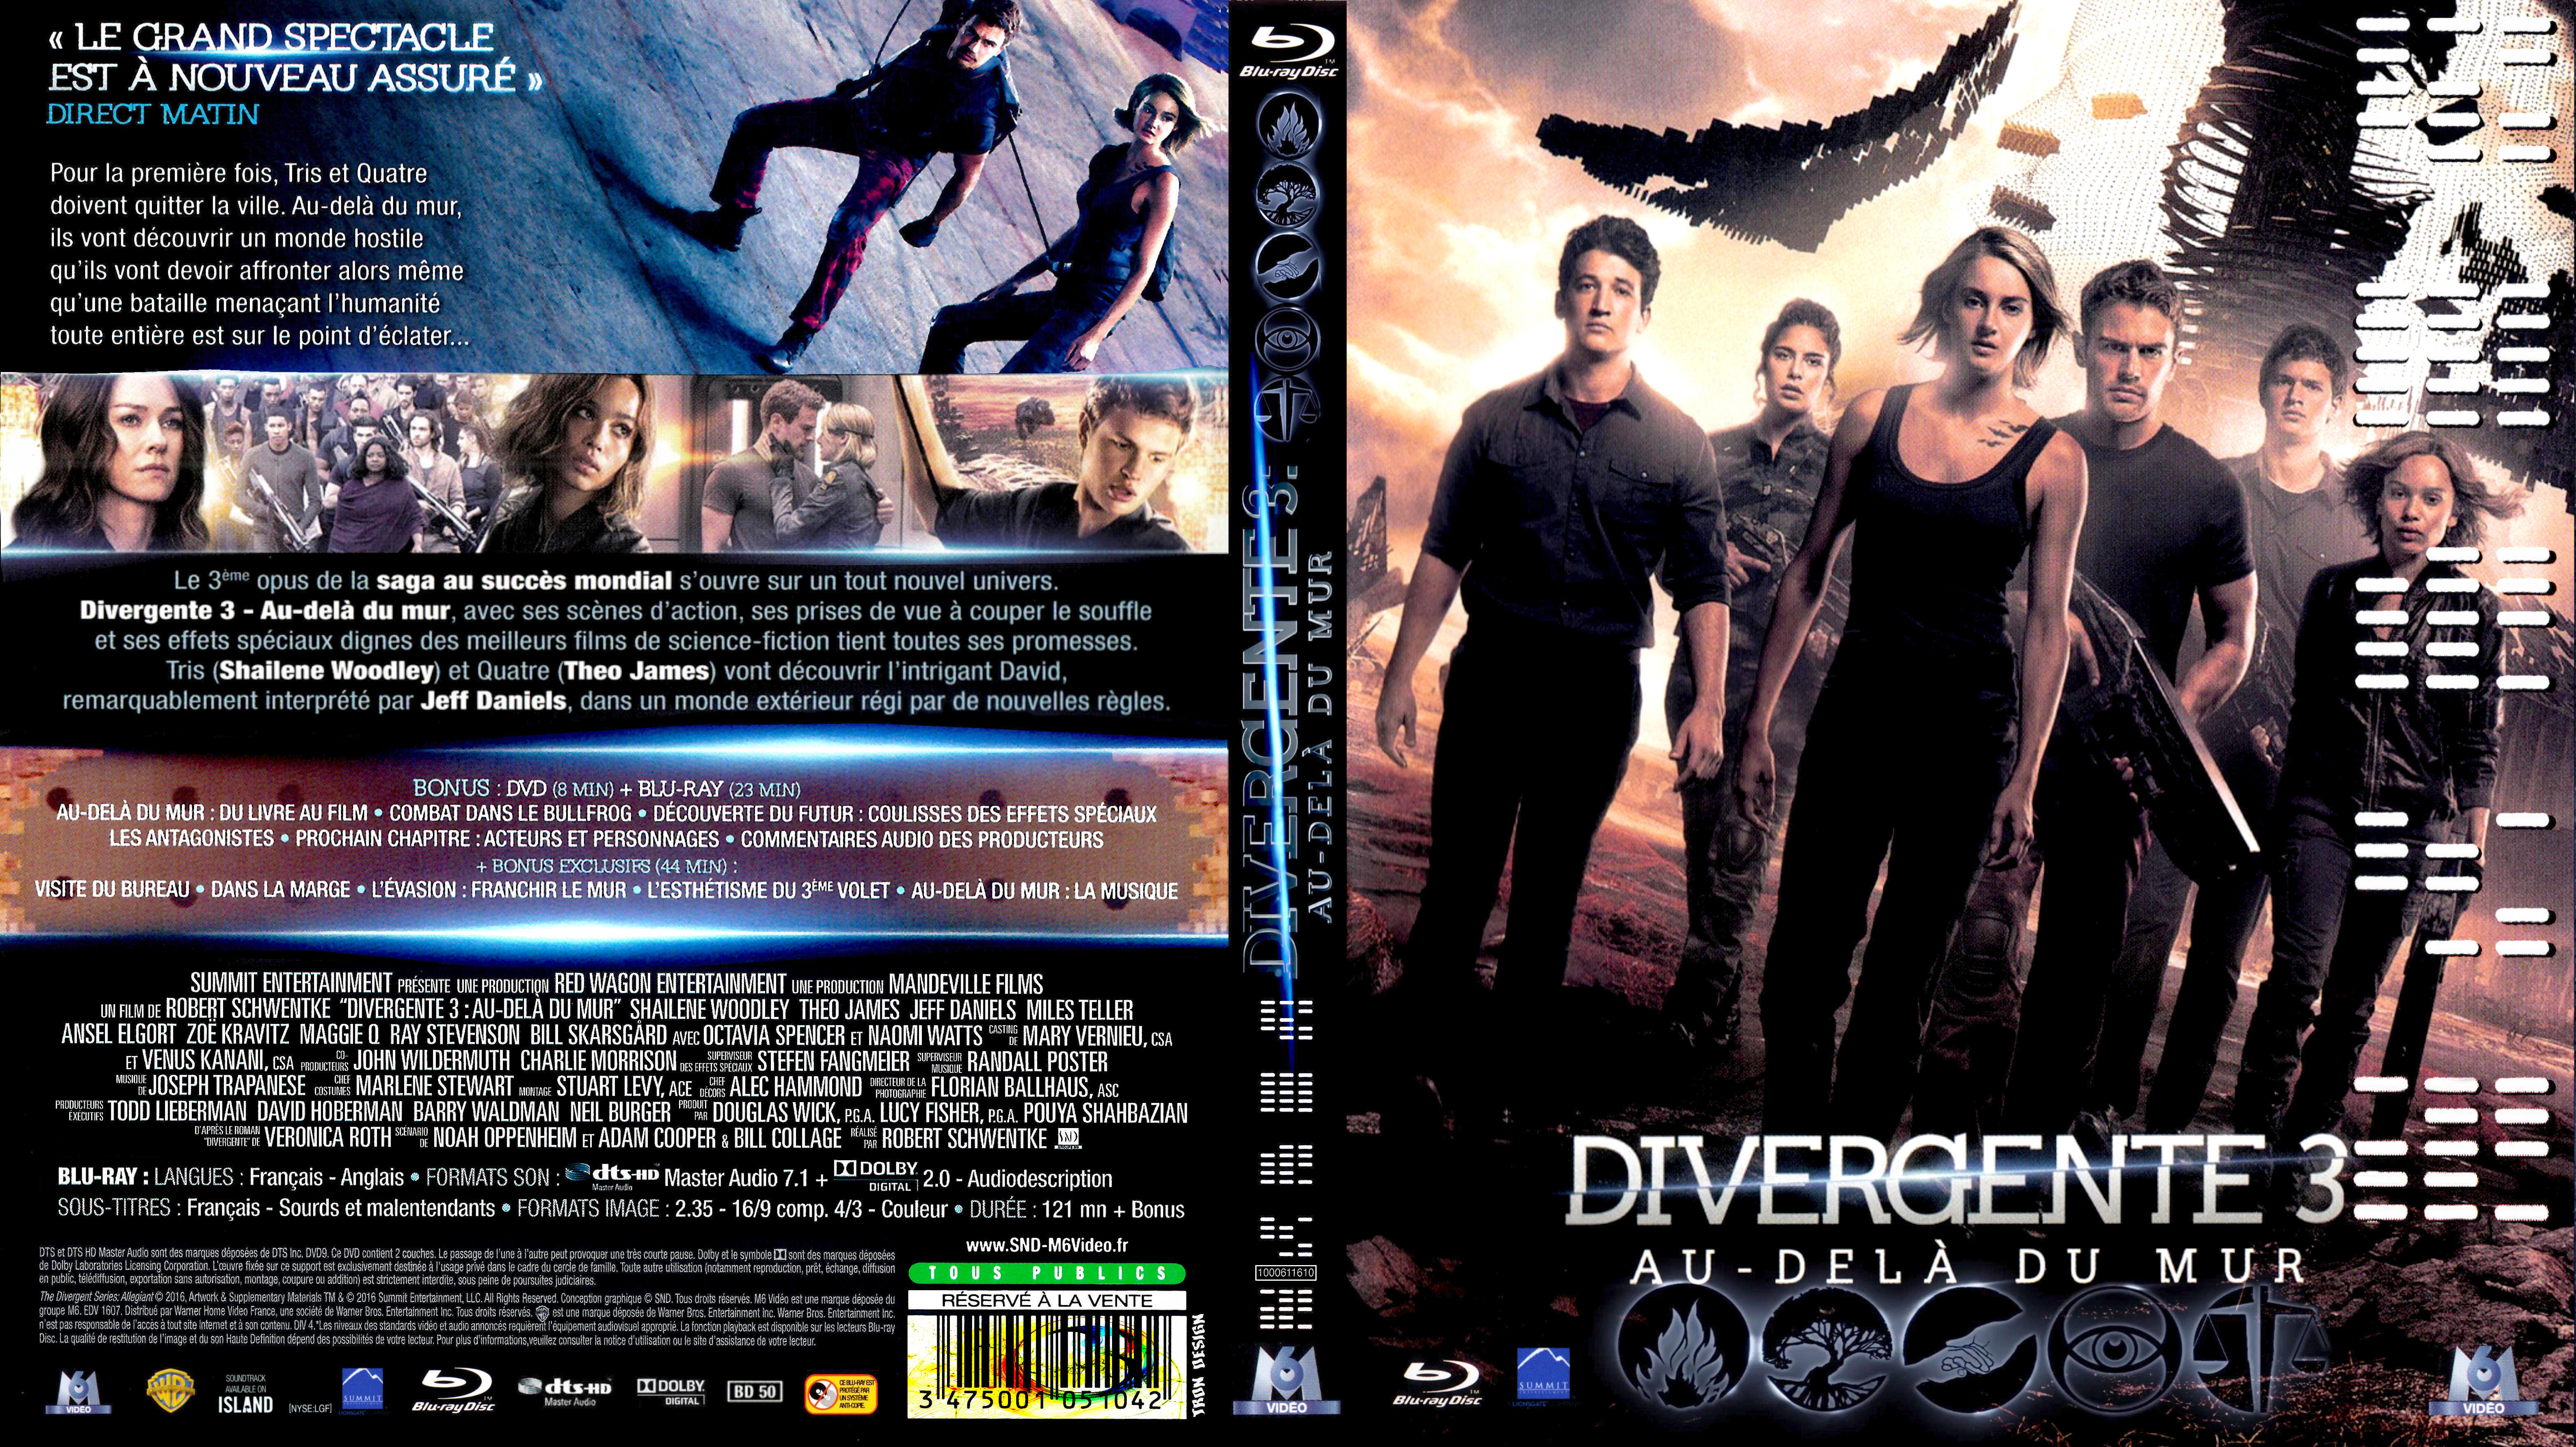 Jaquette DVD Divergente 3 custom (BLU-RAY)